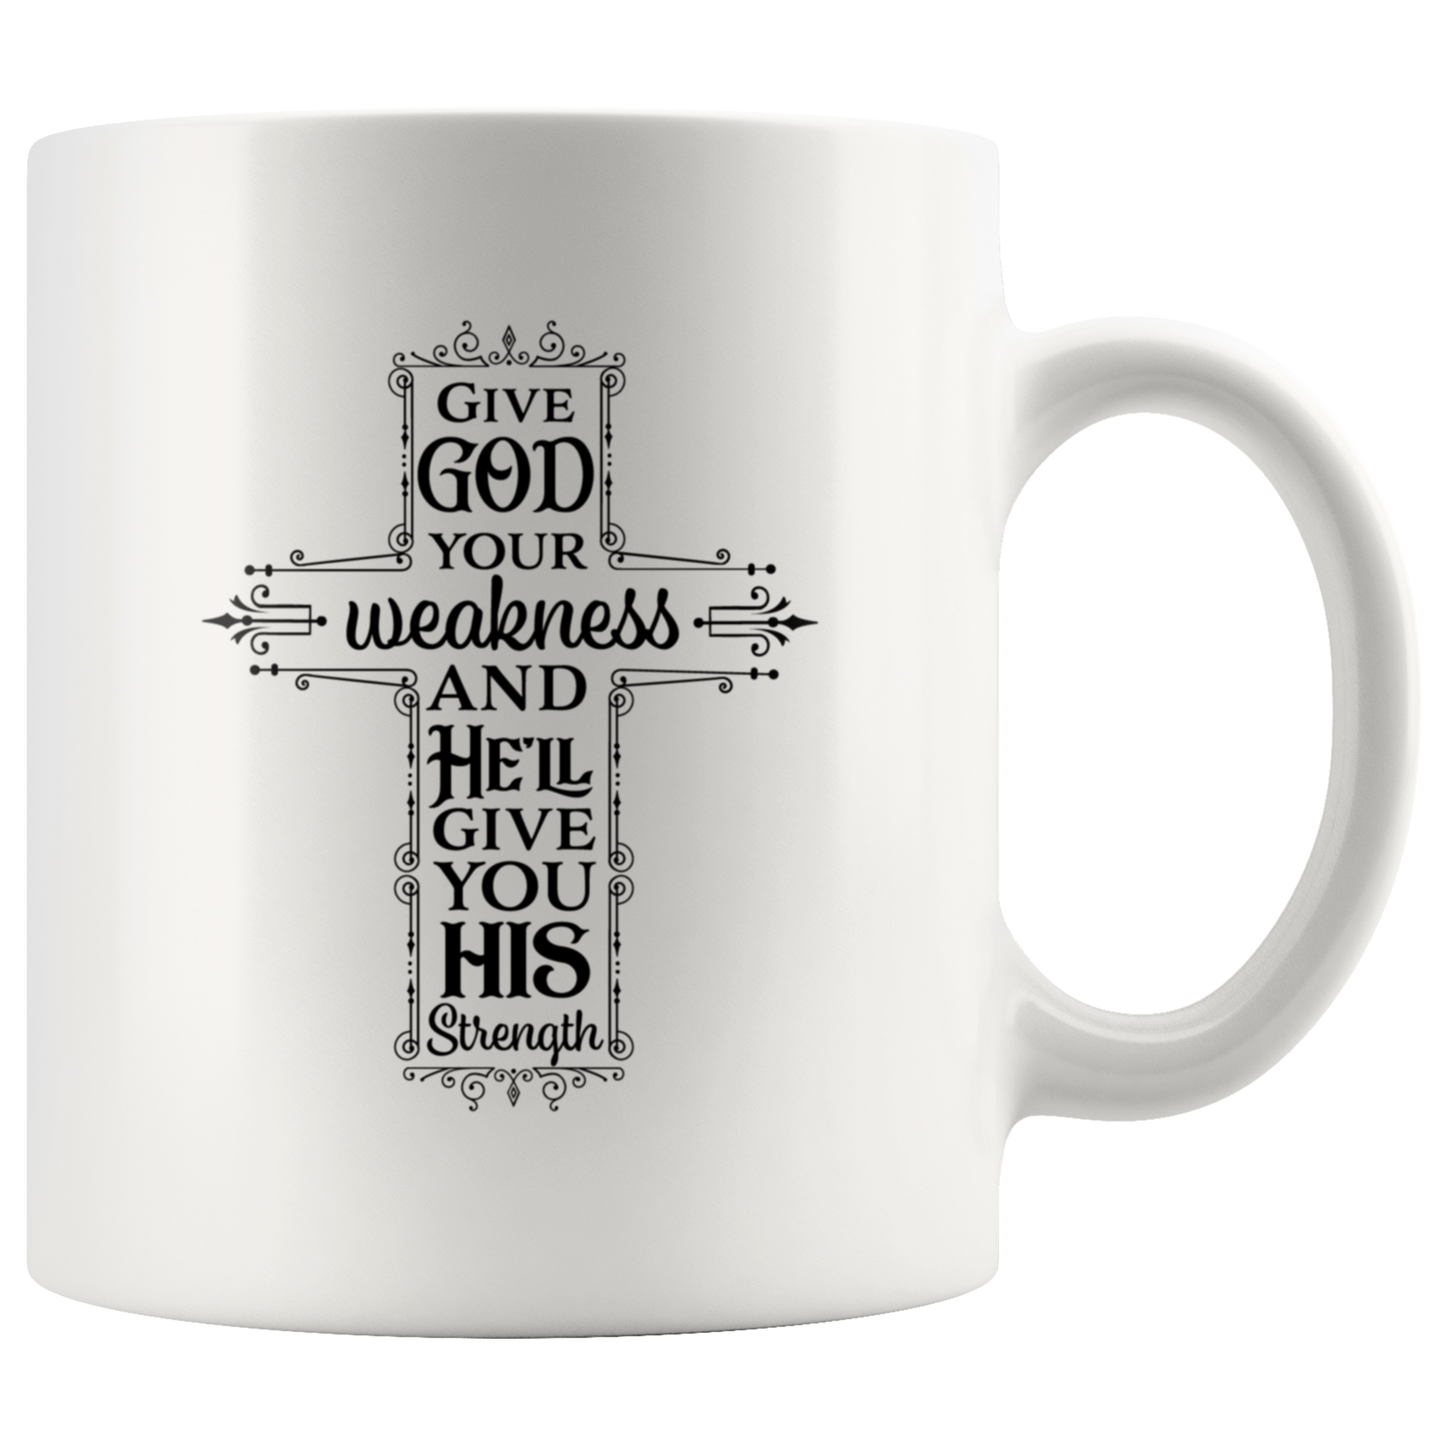 Christian coffee mug gift Religious mug Inspirational Faith Cup Give God Your Weakness